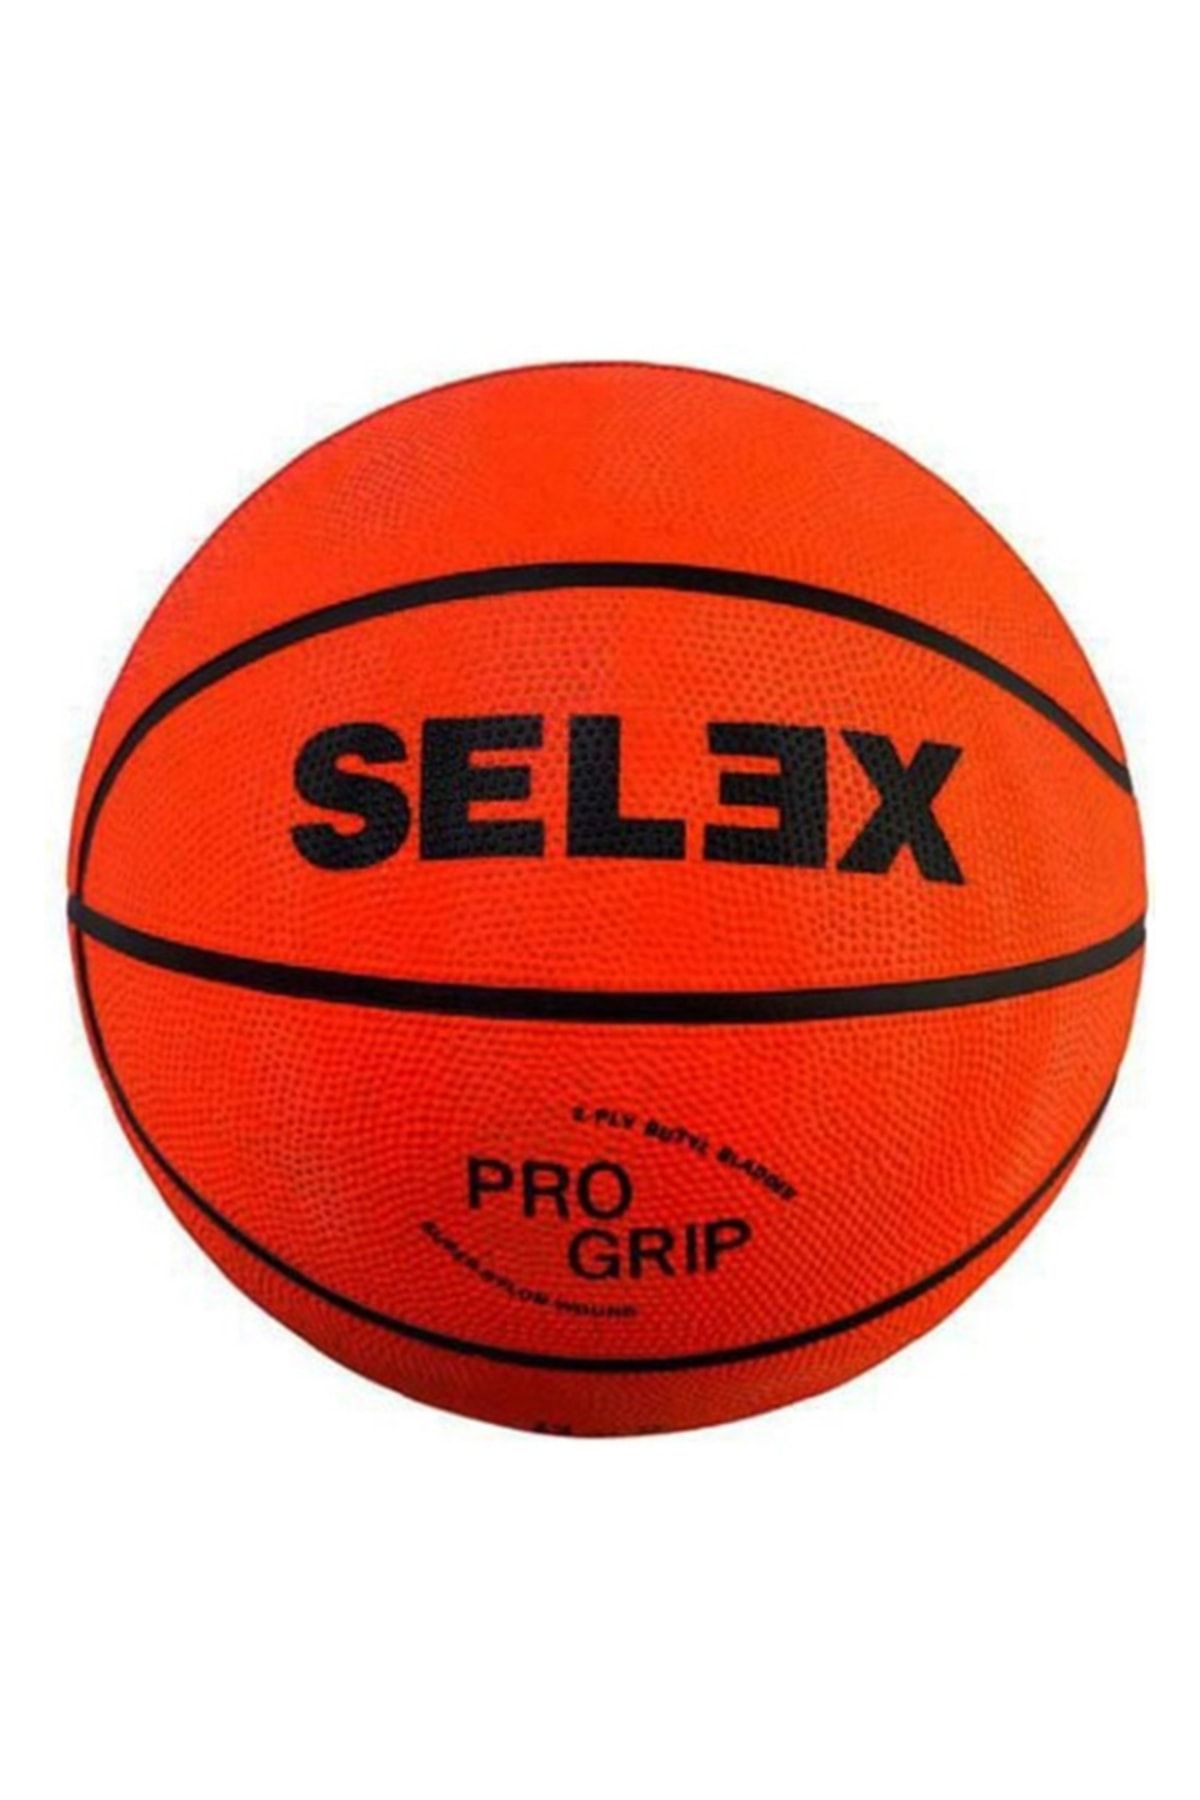 Nerf Selex Basketbol Topu B-7